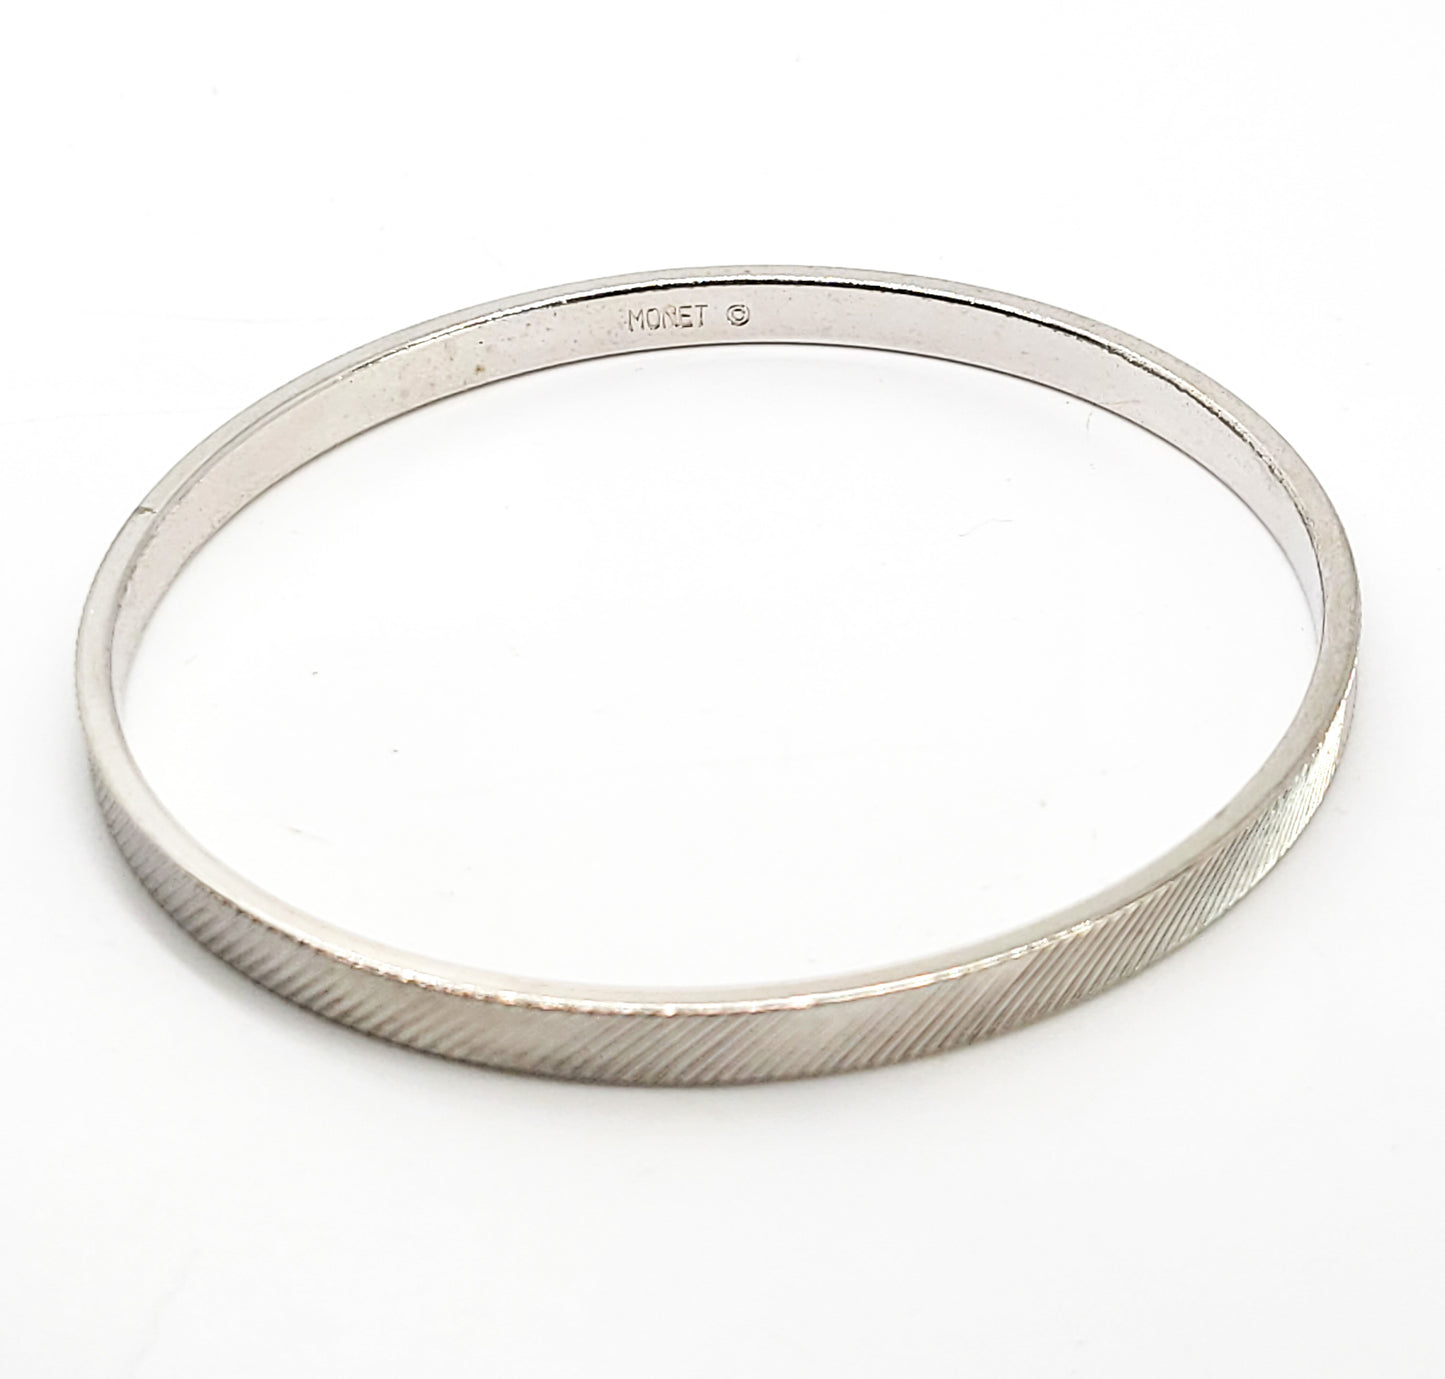 Monet silver toned etched line thin textured vintage bangle bracelet